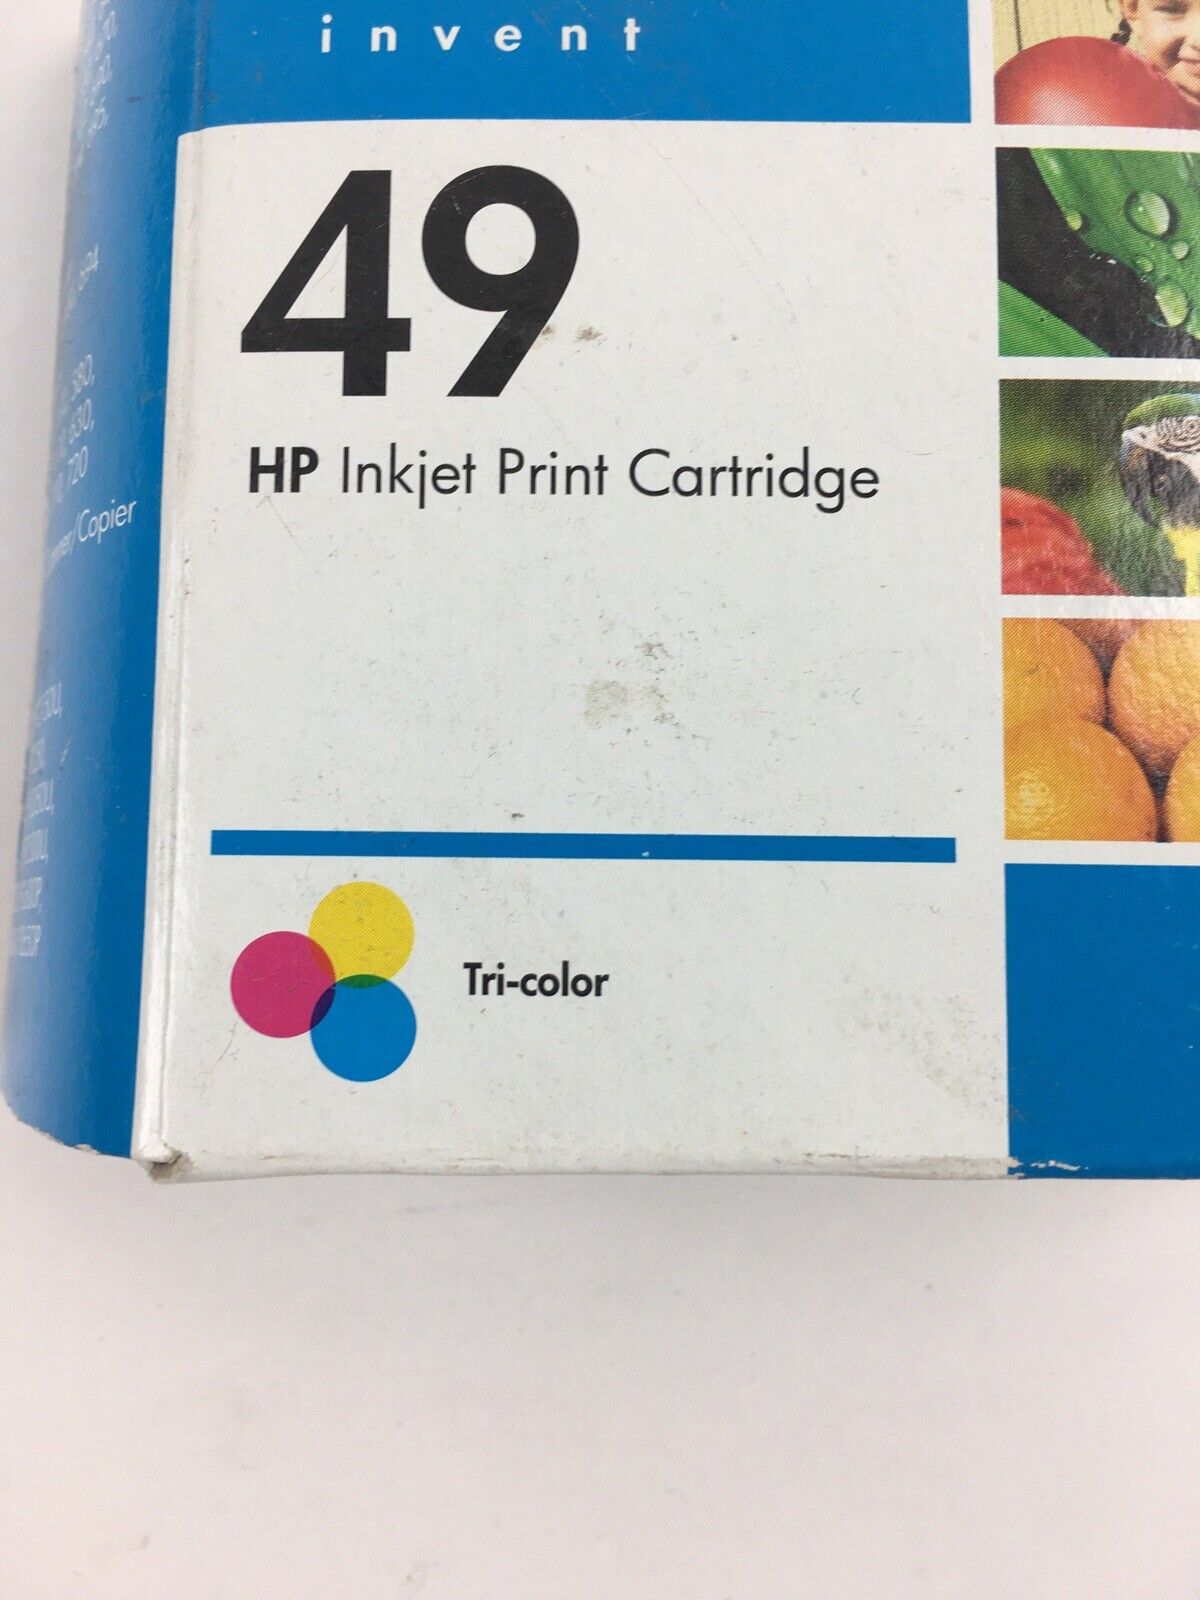 HP 49 Tri-Color Inkjet Print Cartridge 51649A